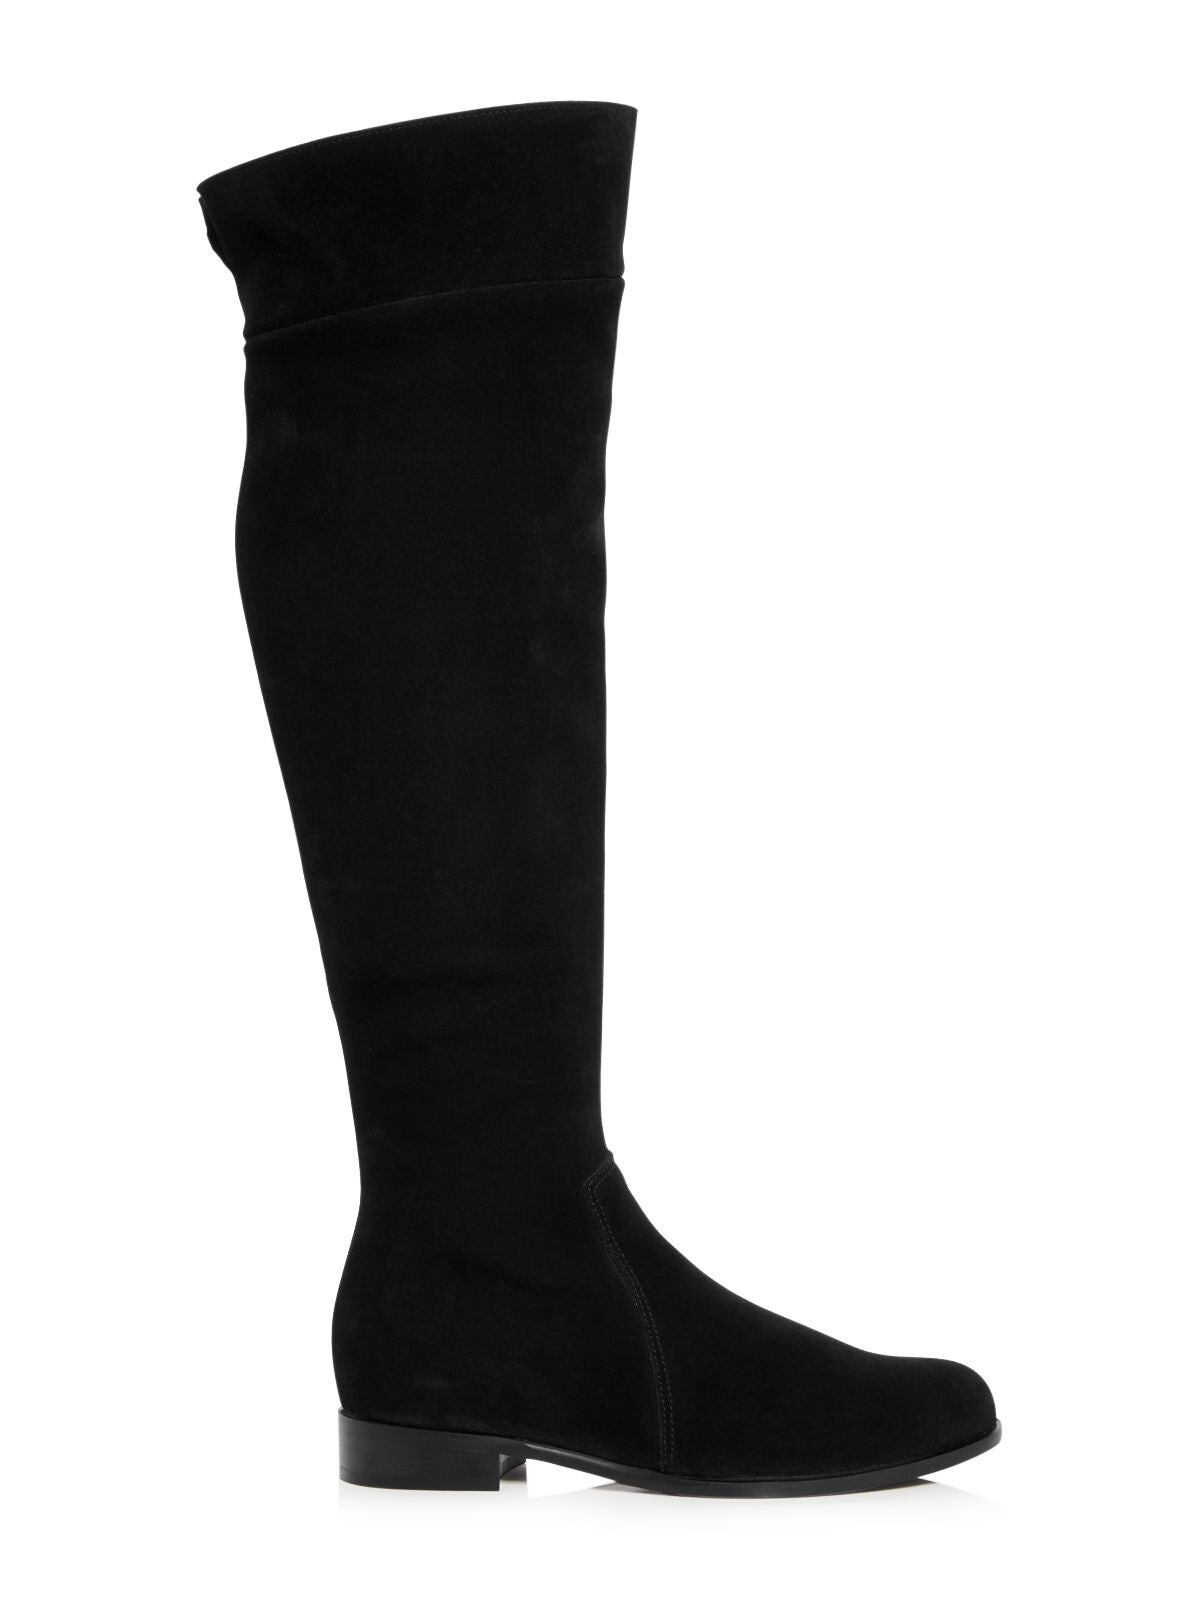 LA CANADIENNE Womens Black Padded Secret Almond Toe Zip-Up Boots Shoes 6.5 M